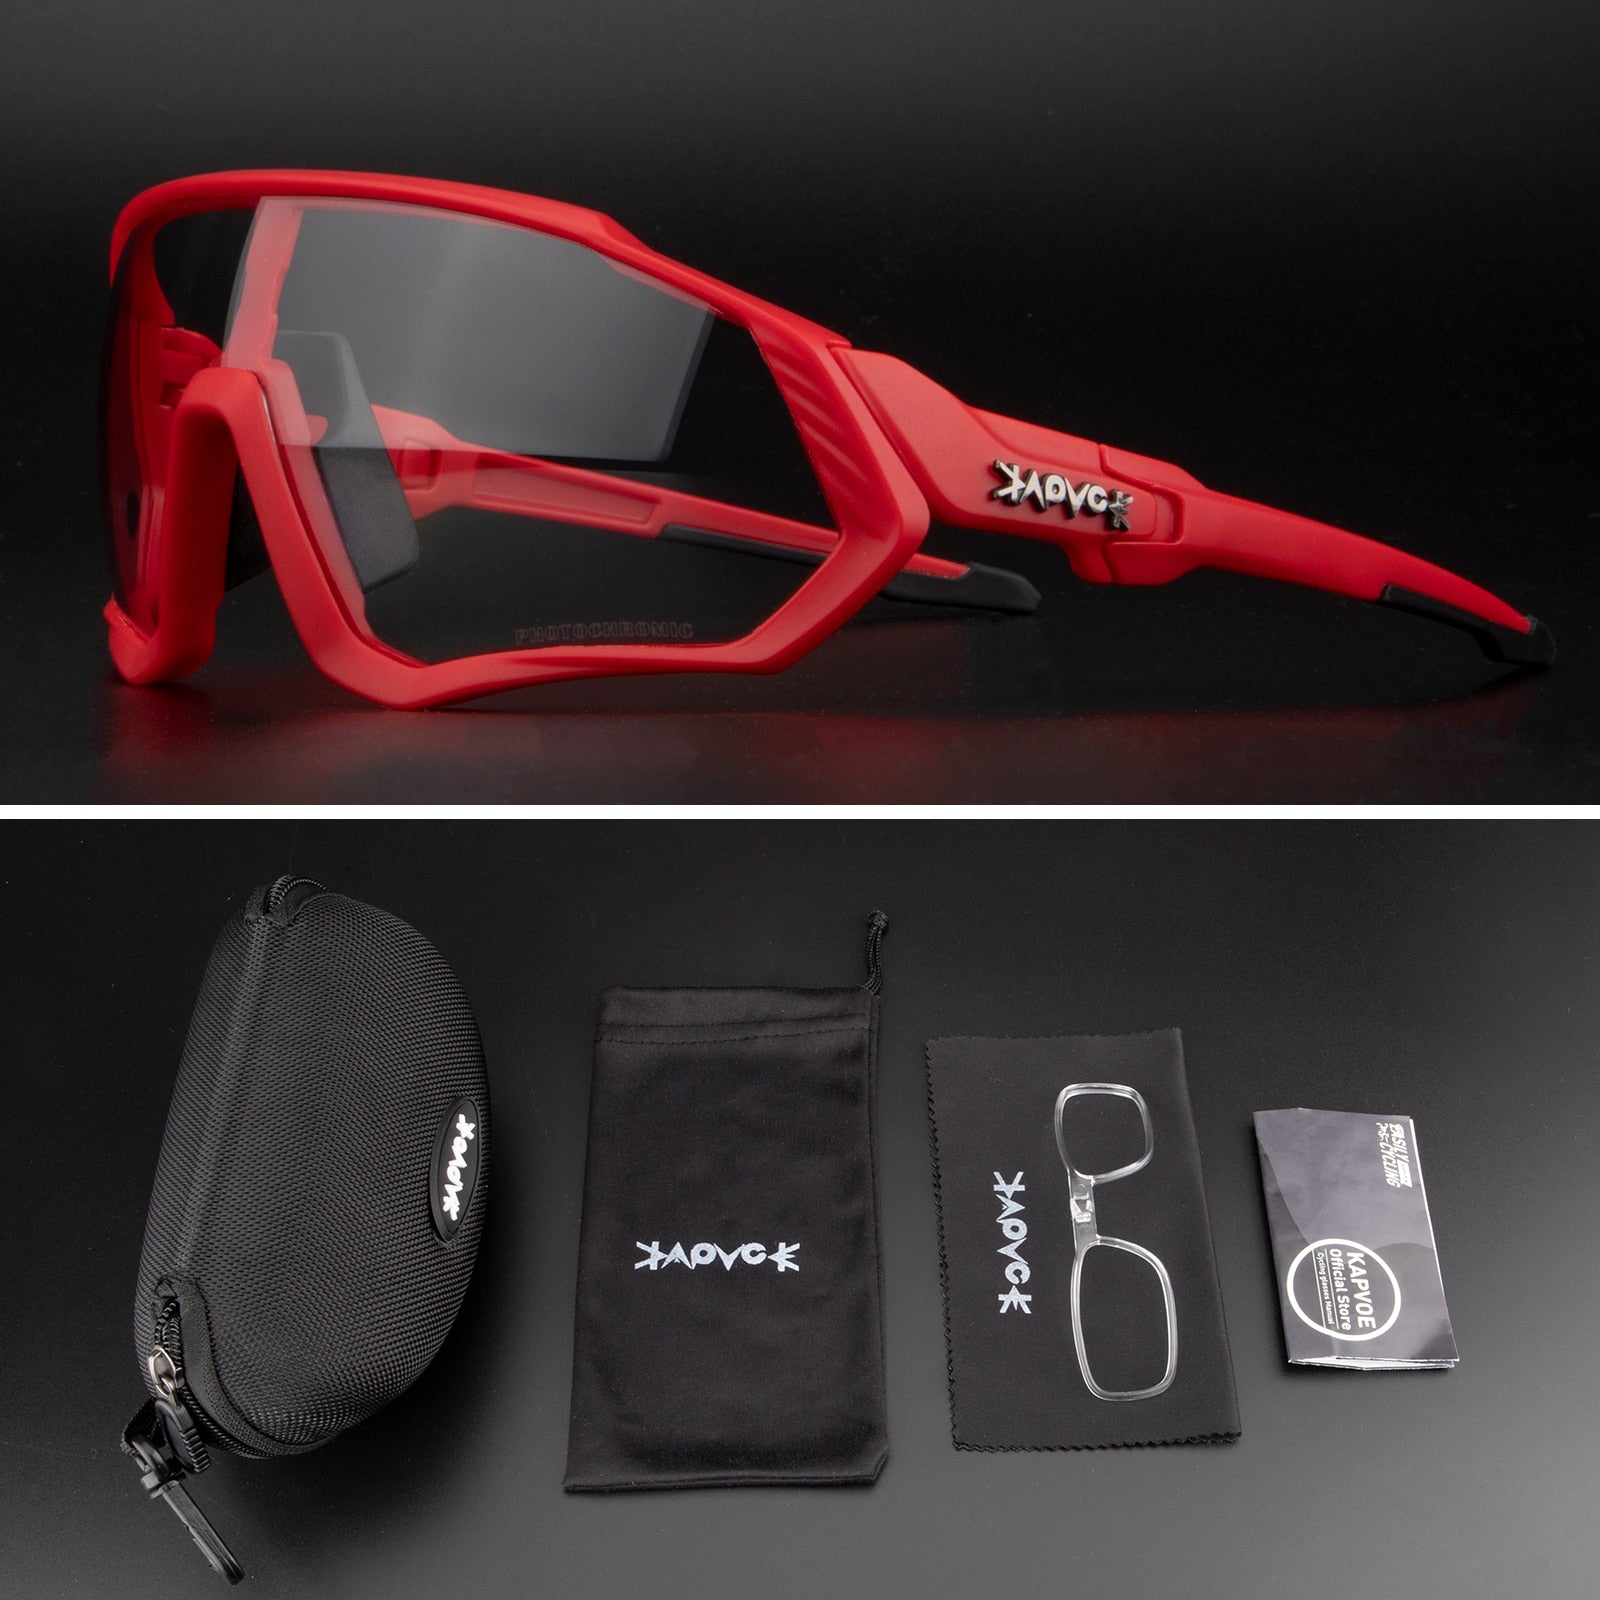 kapvoe Photochromic Cycling Glasses Fishing Sport Sunglasses MTB